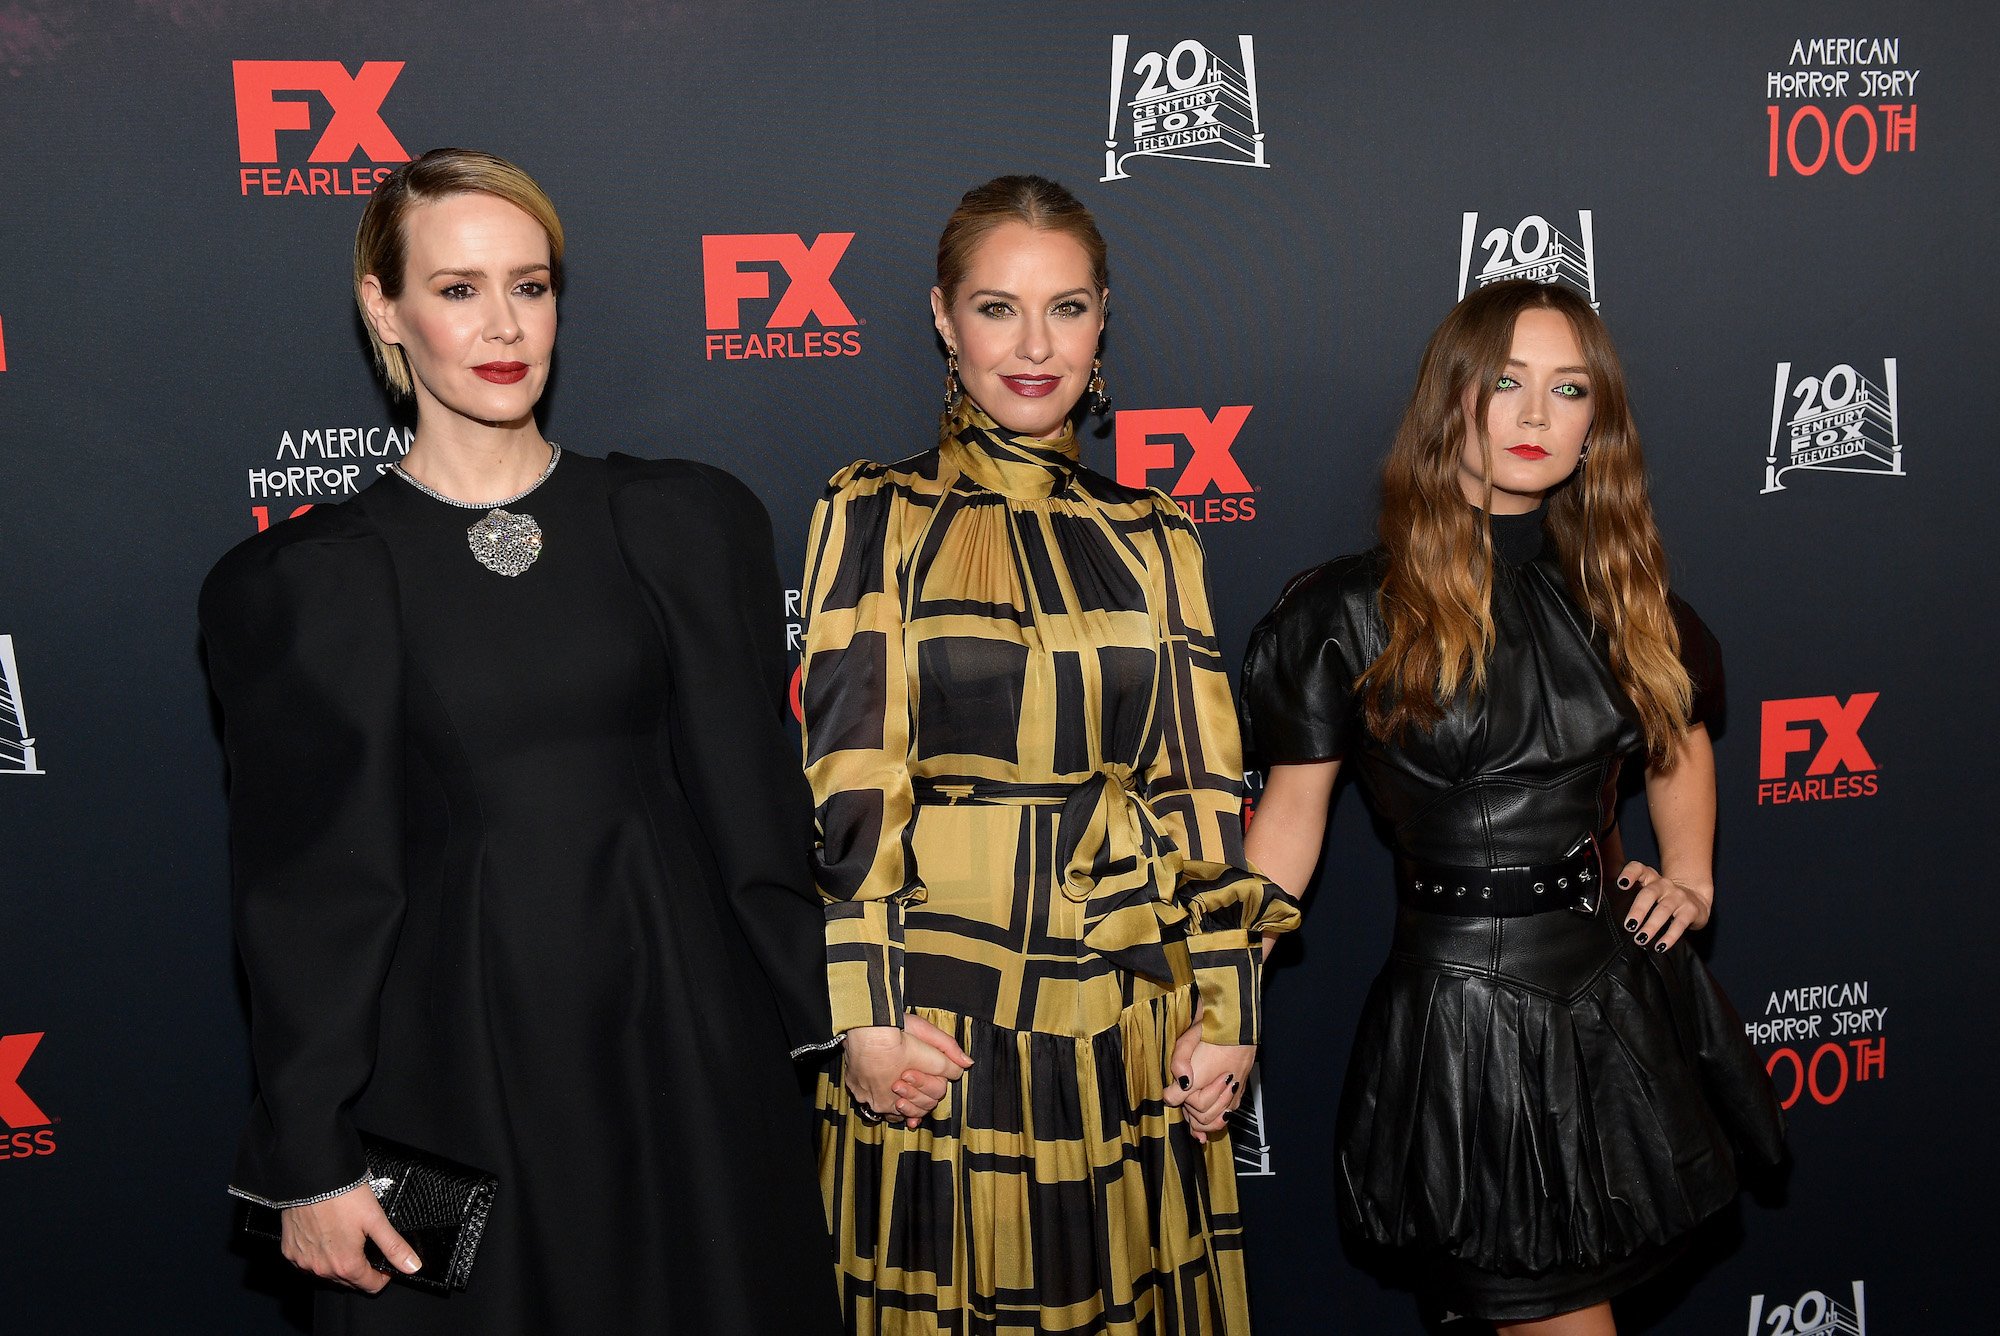 American Horror Story stars Sarah Paulson, Leslie Grossman and Billie Lourd pose on the red carpet